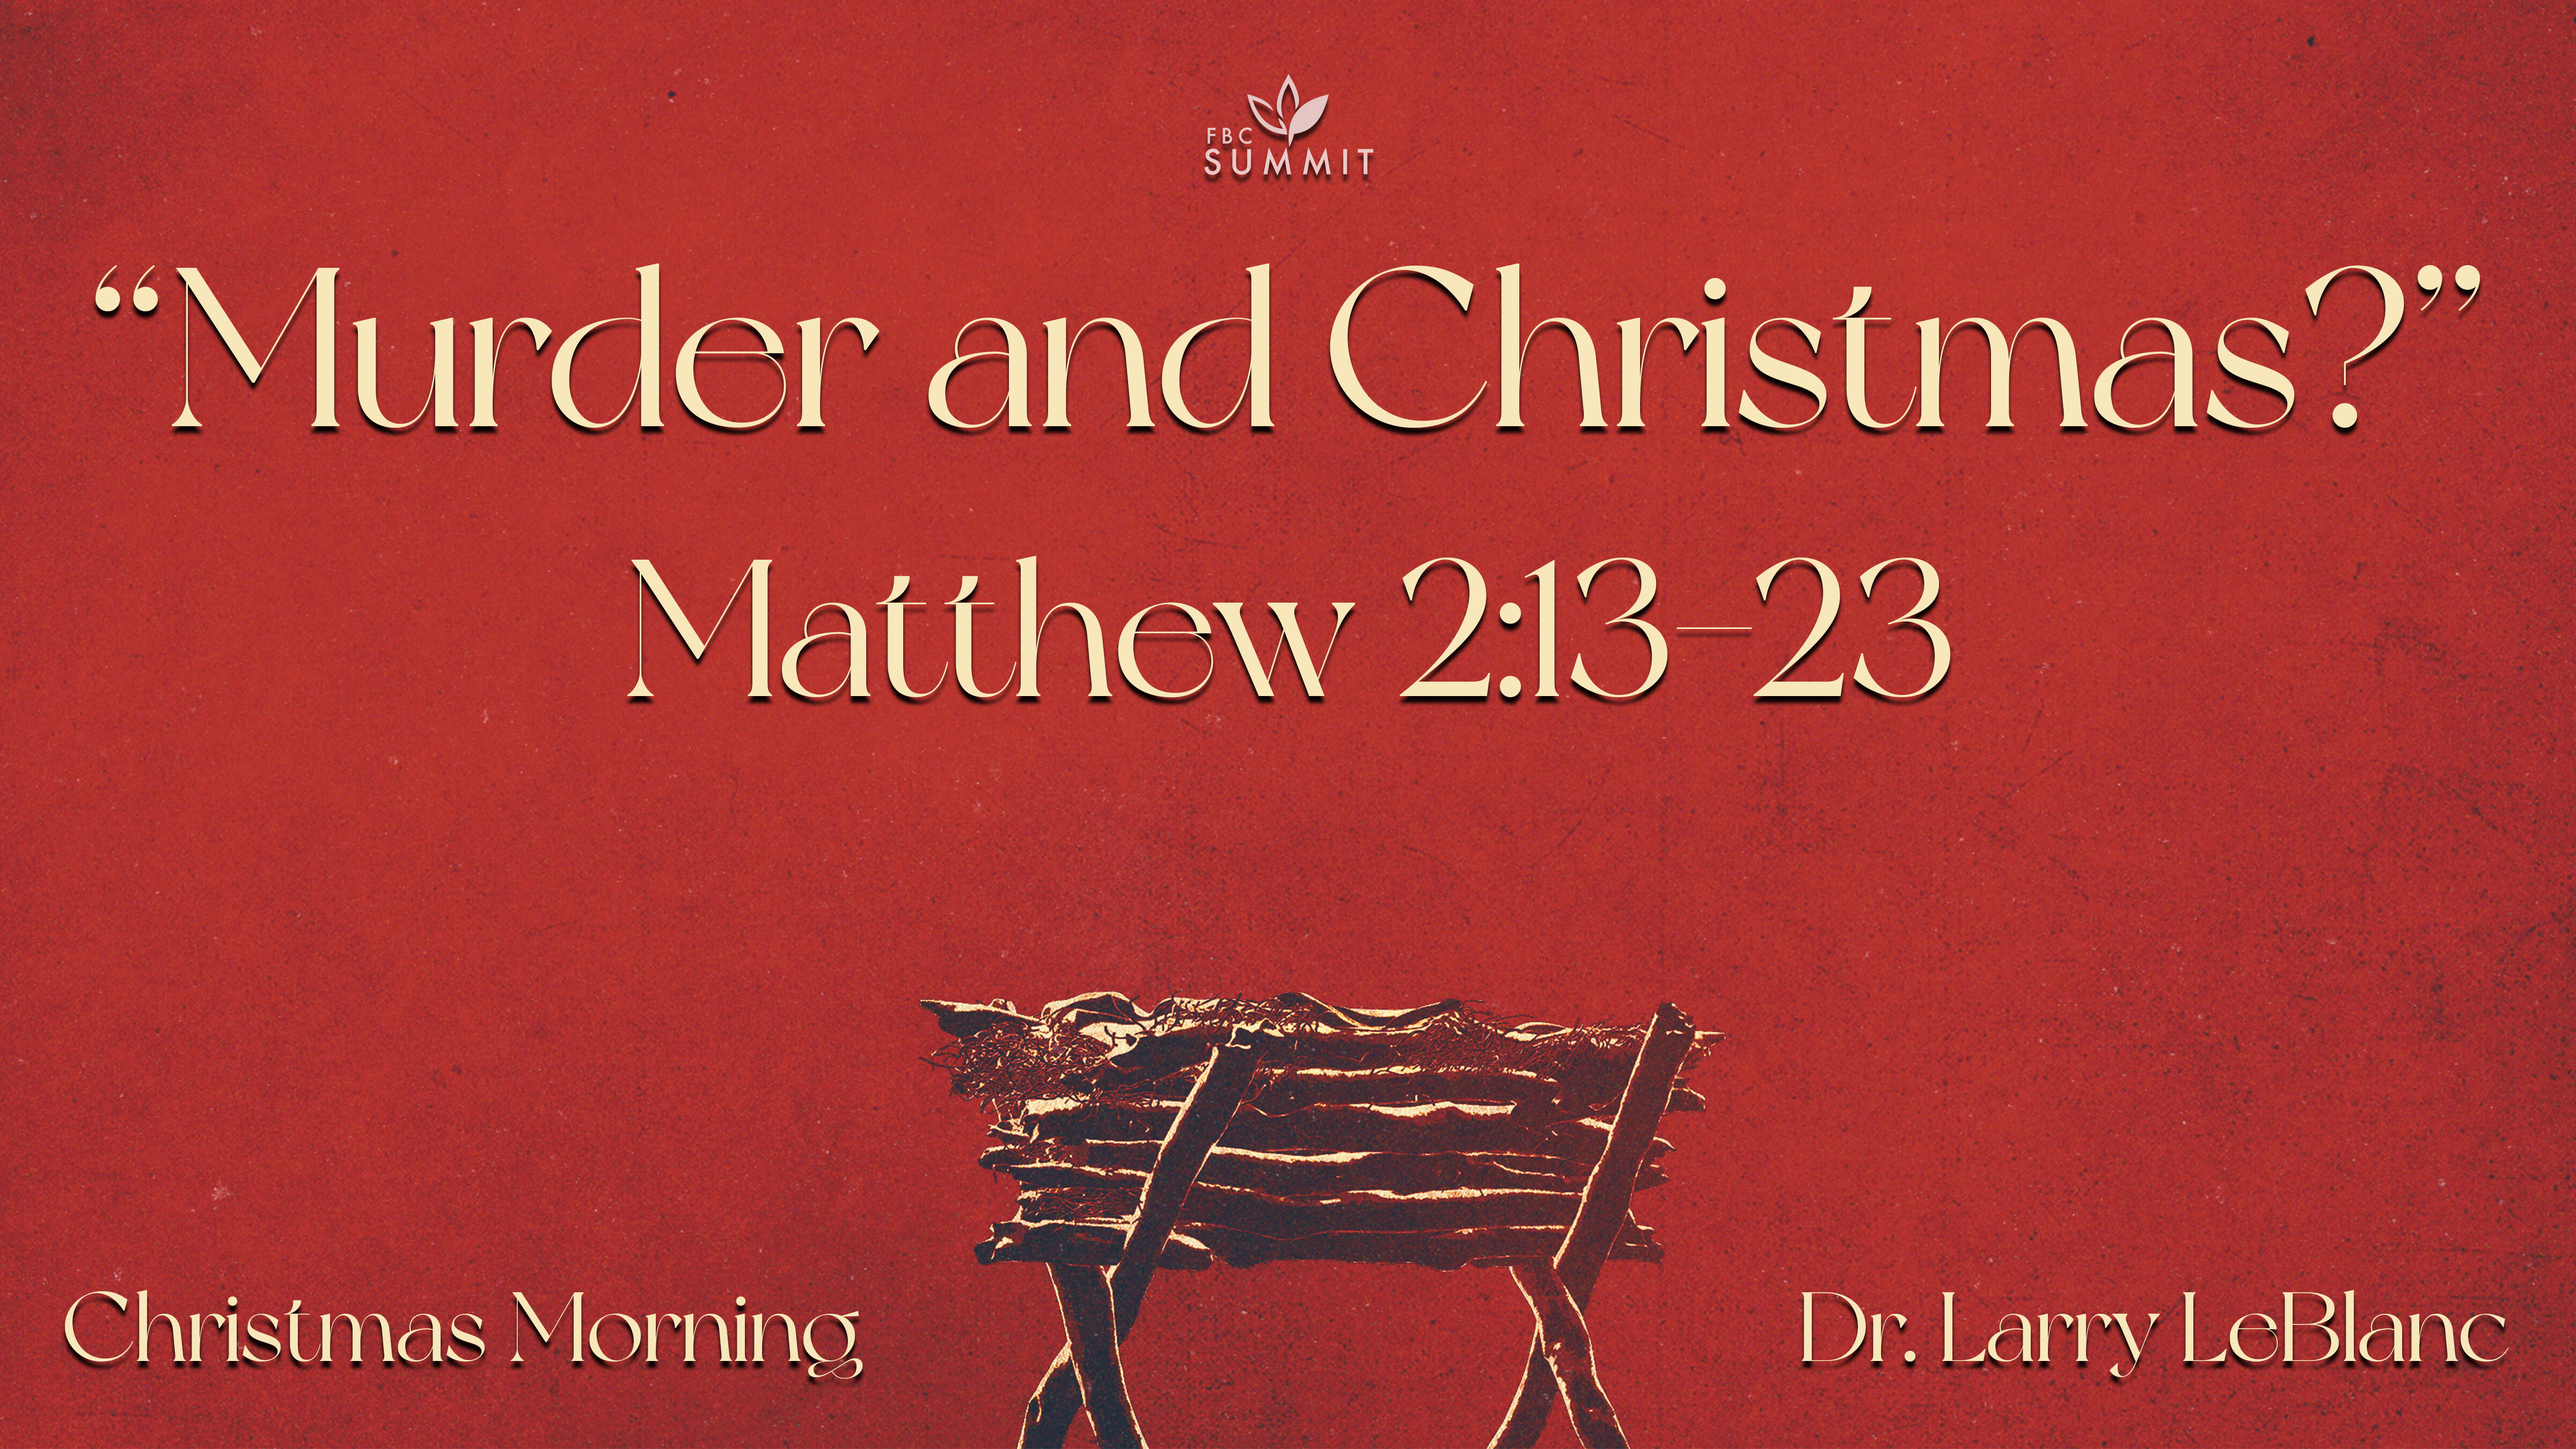 "Murder & Christmas?" Matthew 2:13-23